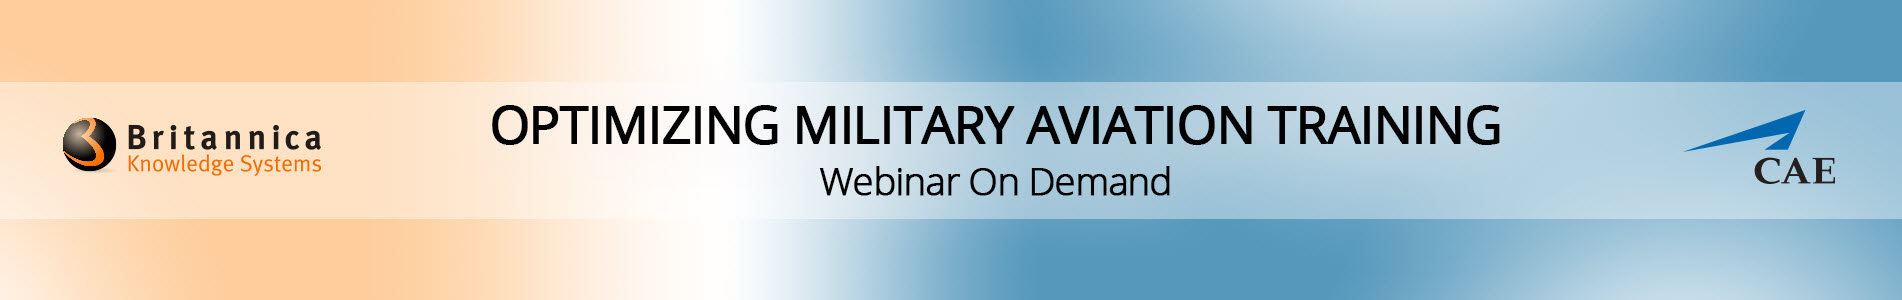 Header_Military aviation webinar on demand_1902x300